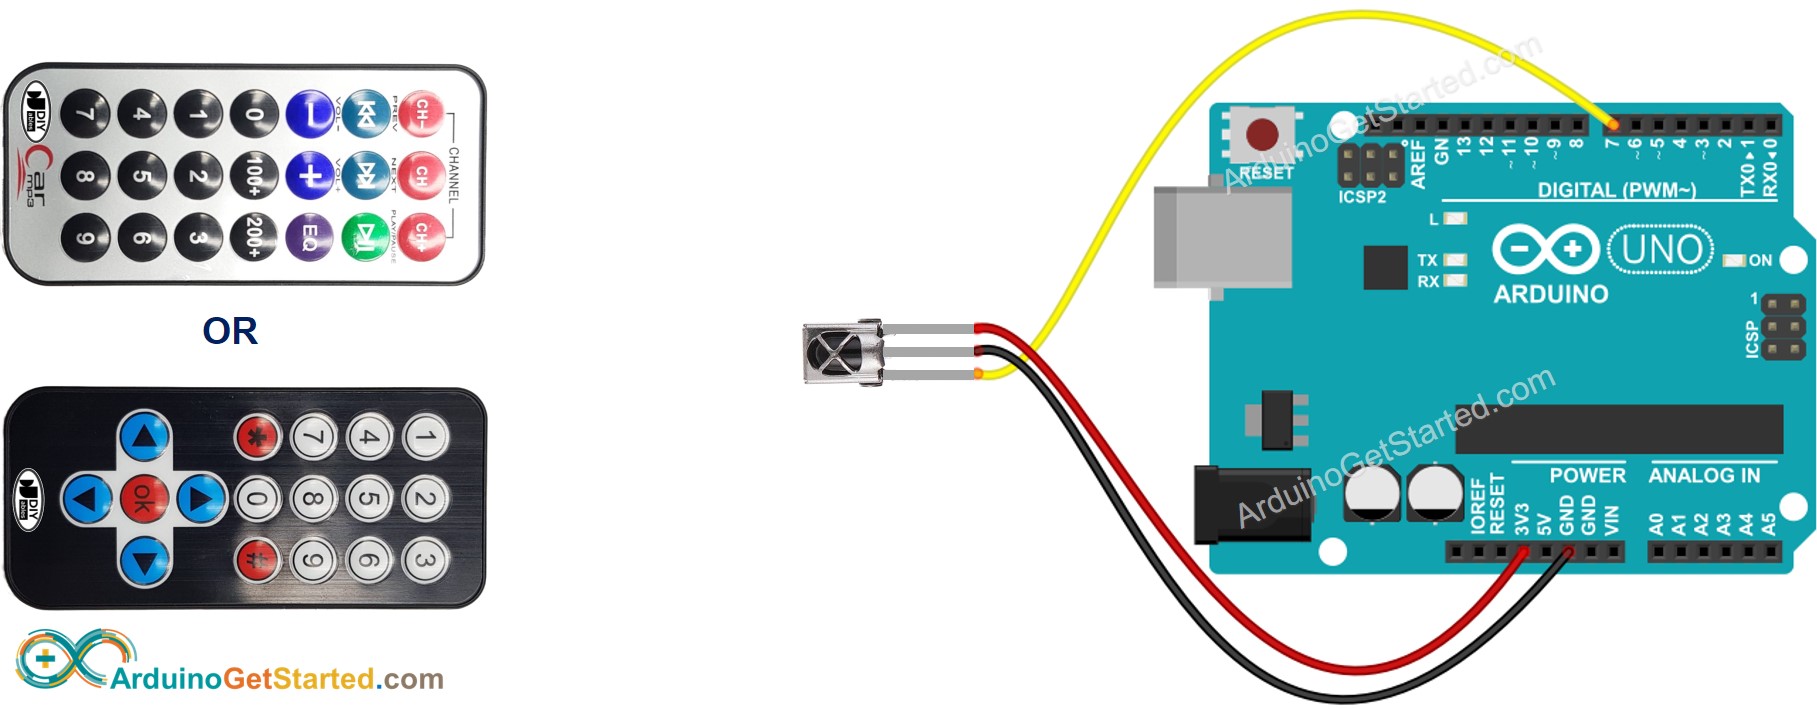 Schéma de câblage de la télécommande infrarouge Arduino